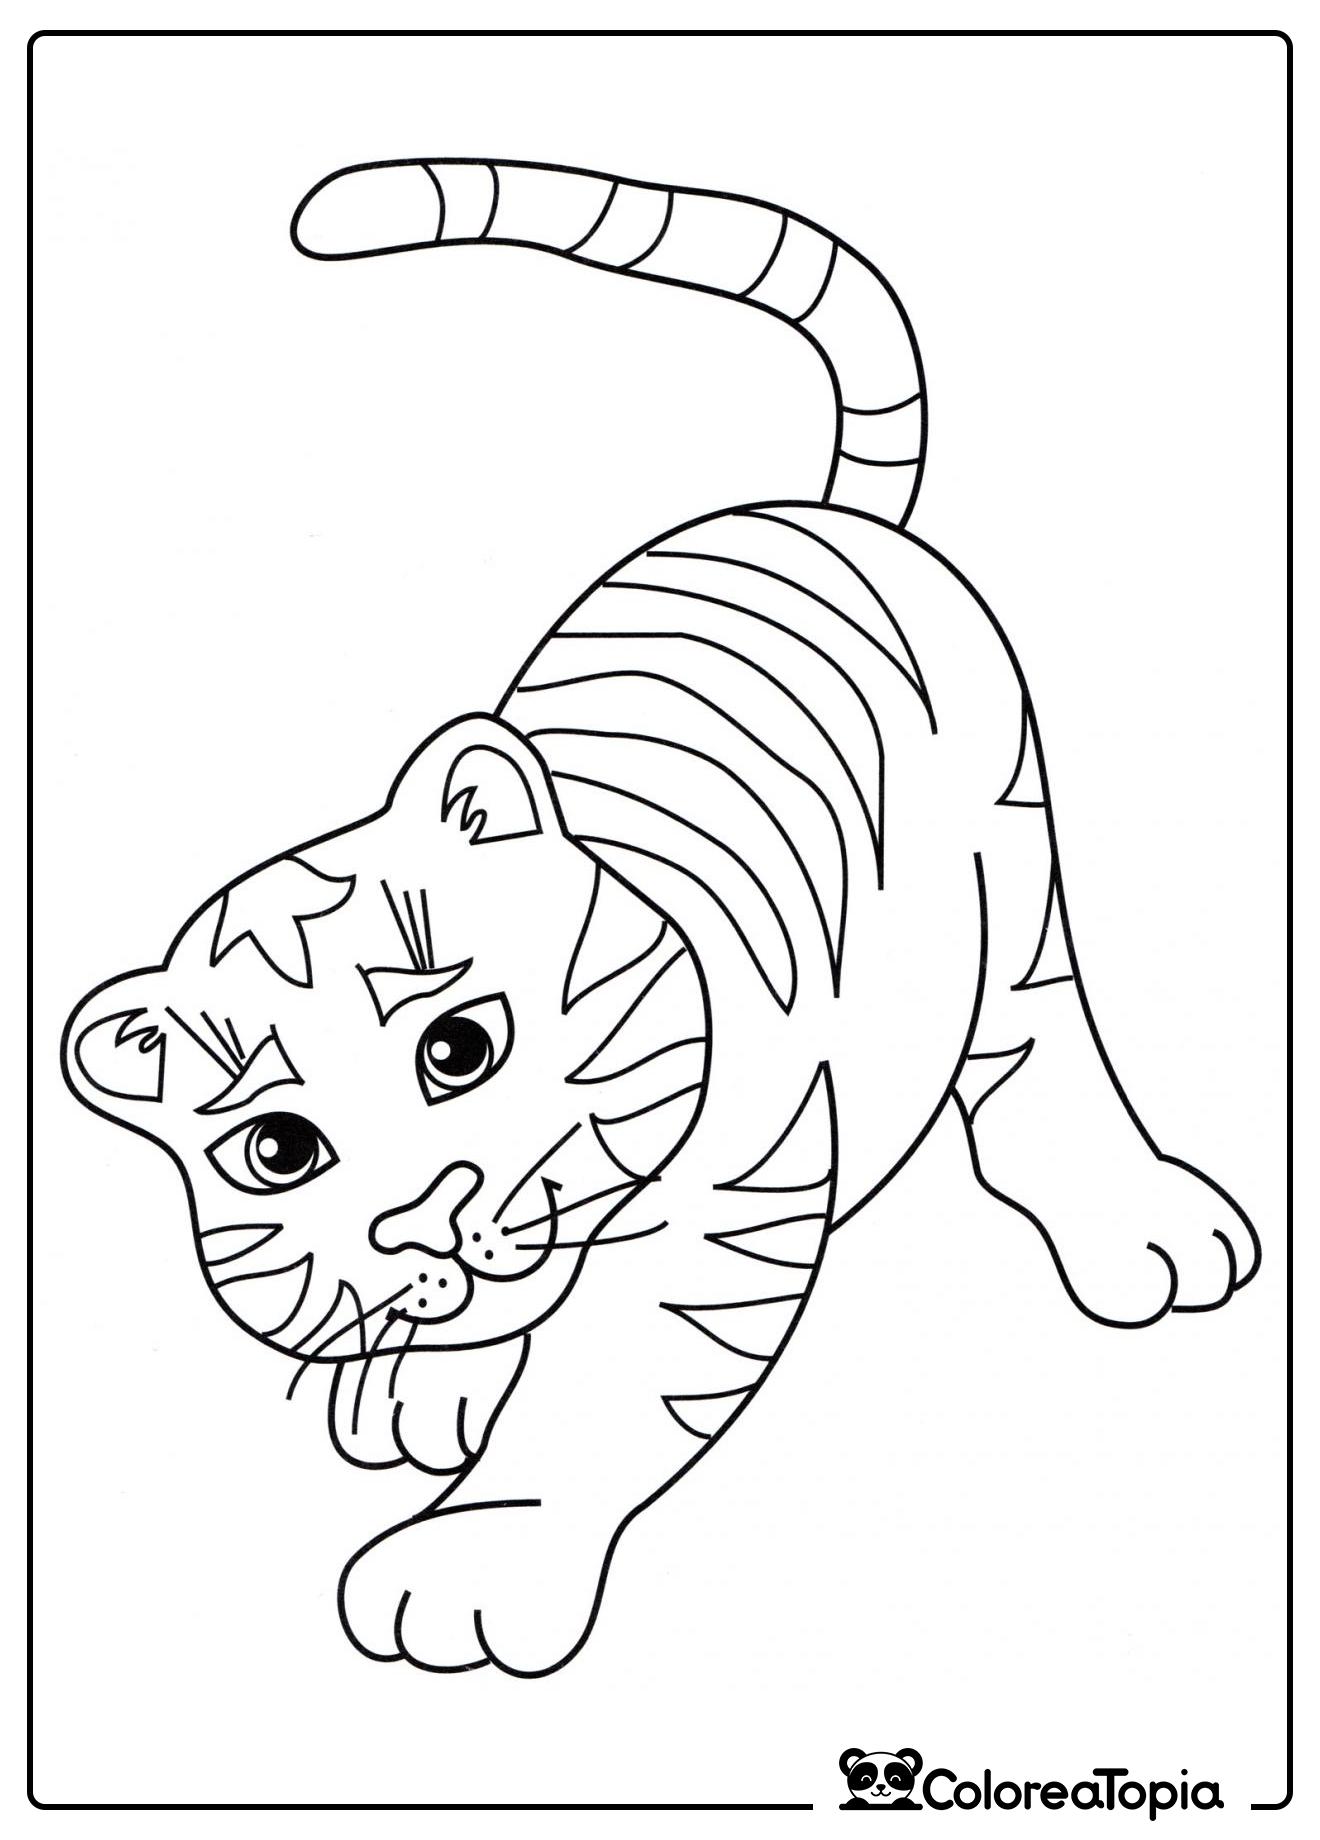 Tigre juguetón - dibujo para colorear